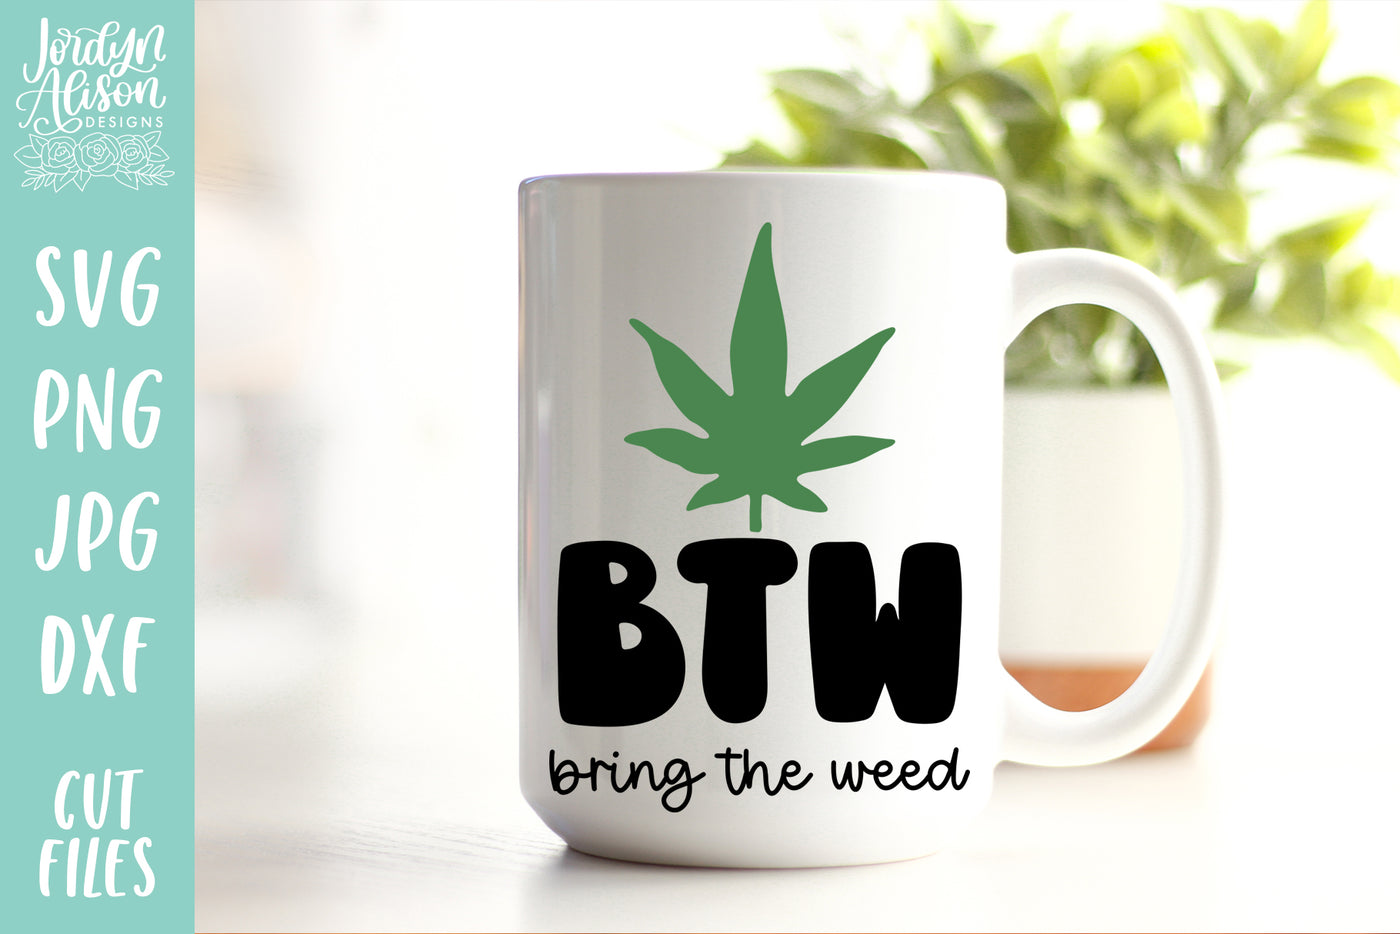 BTW Bring the Weed SVG